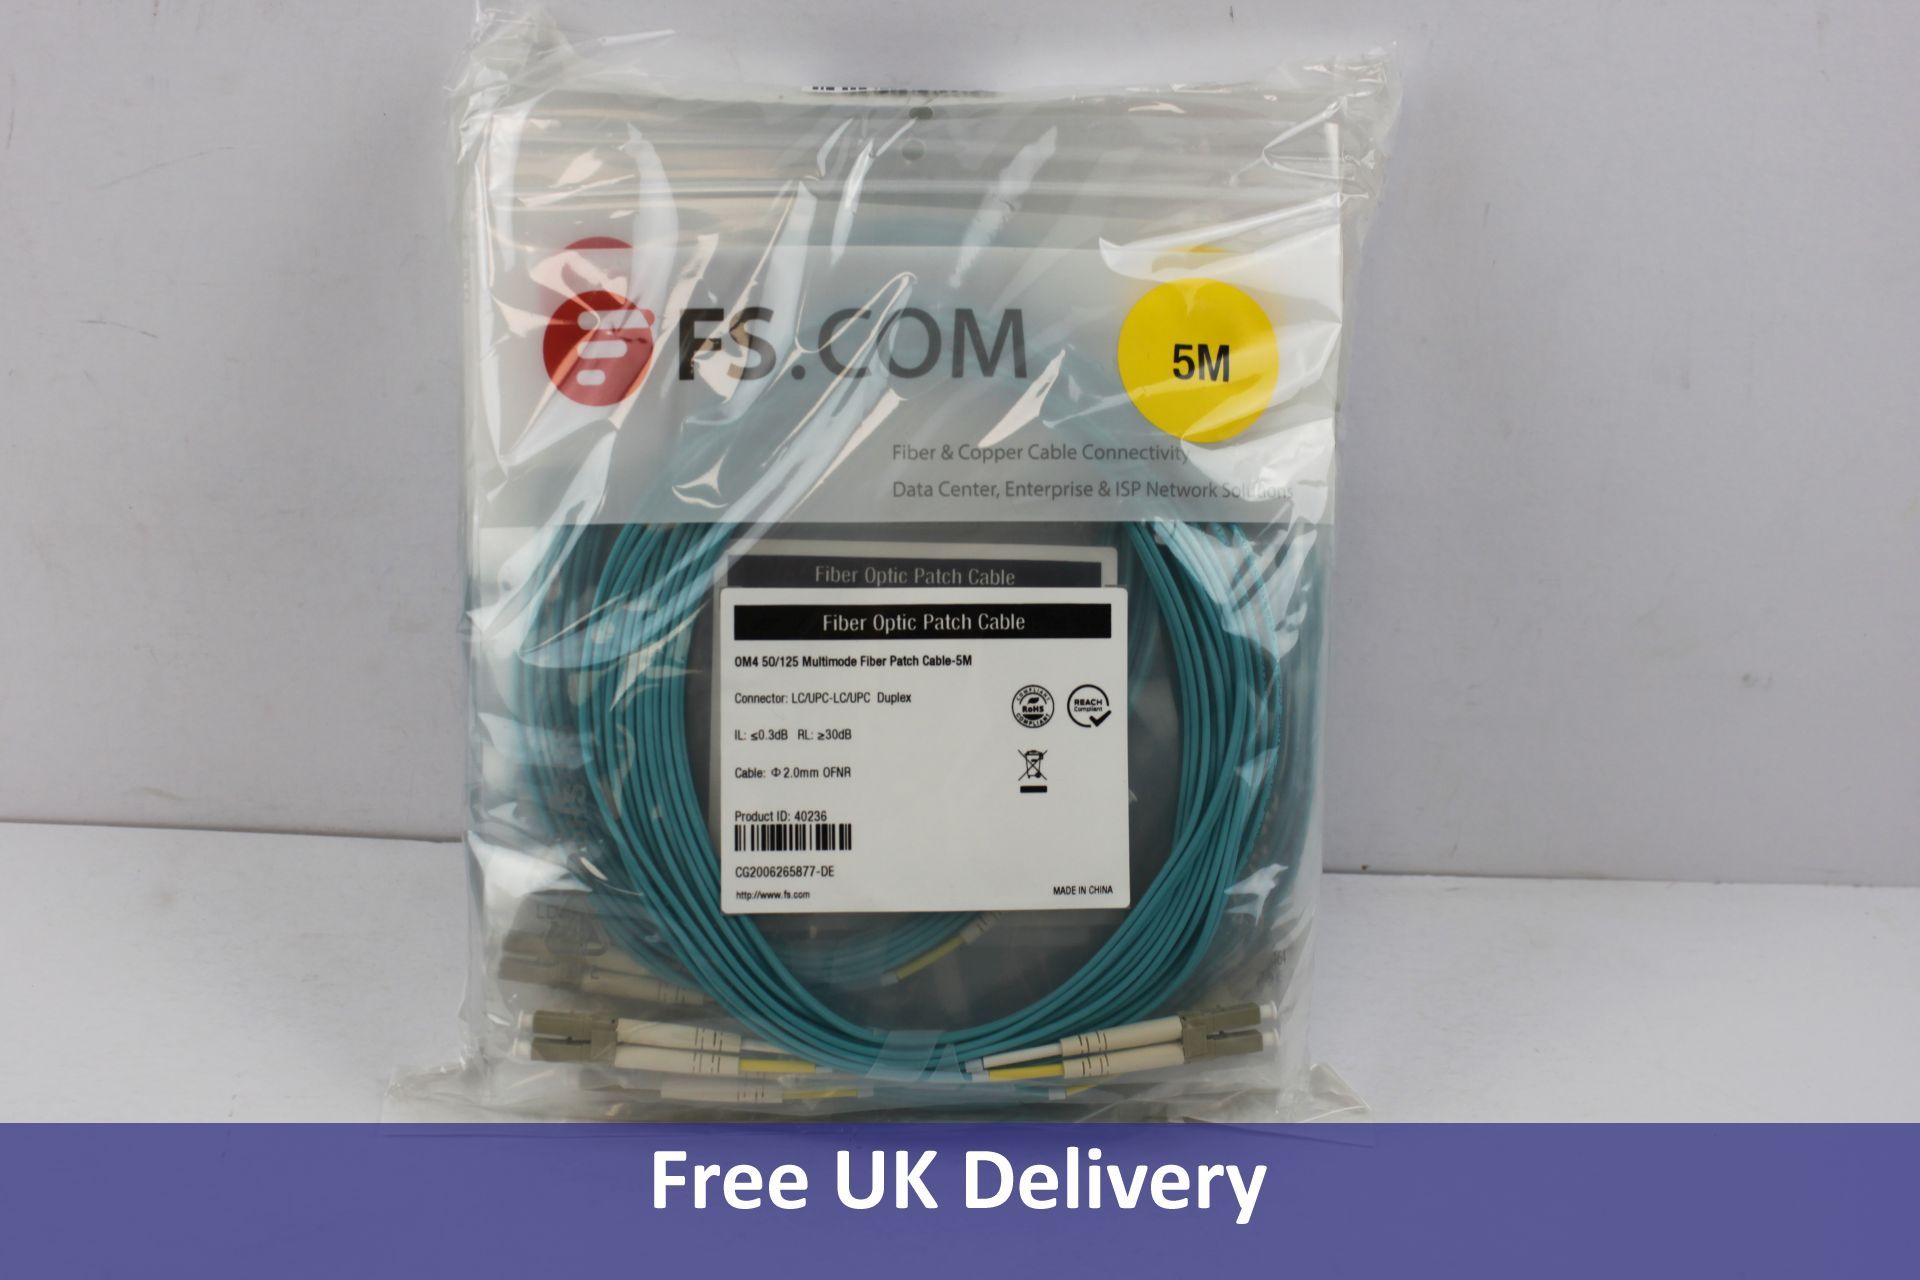 Eleven Fs.com Fibre Optic Patch Cable 1x40251 10 metre, 10x 40236 5 metre Cables,